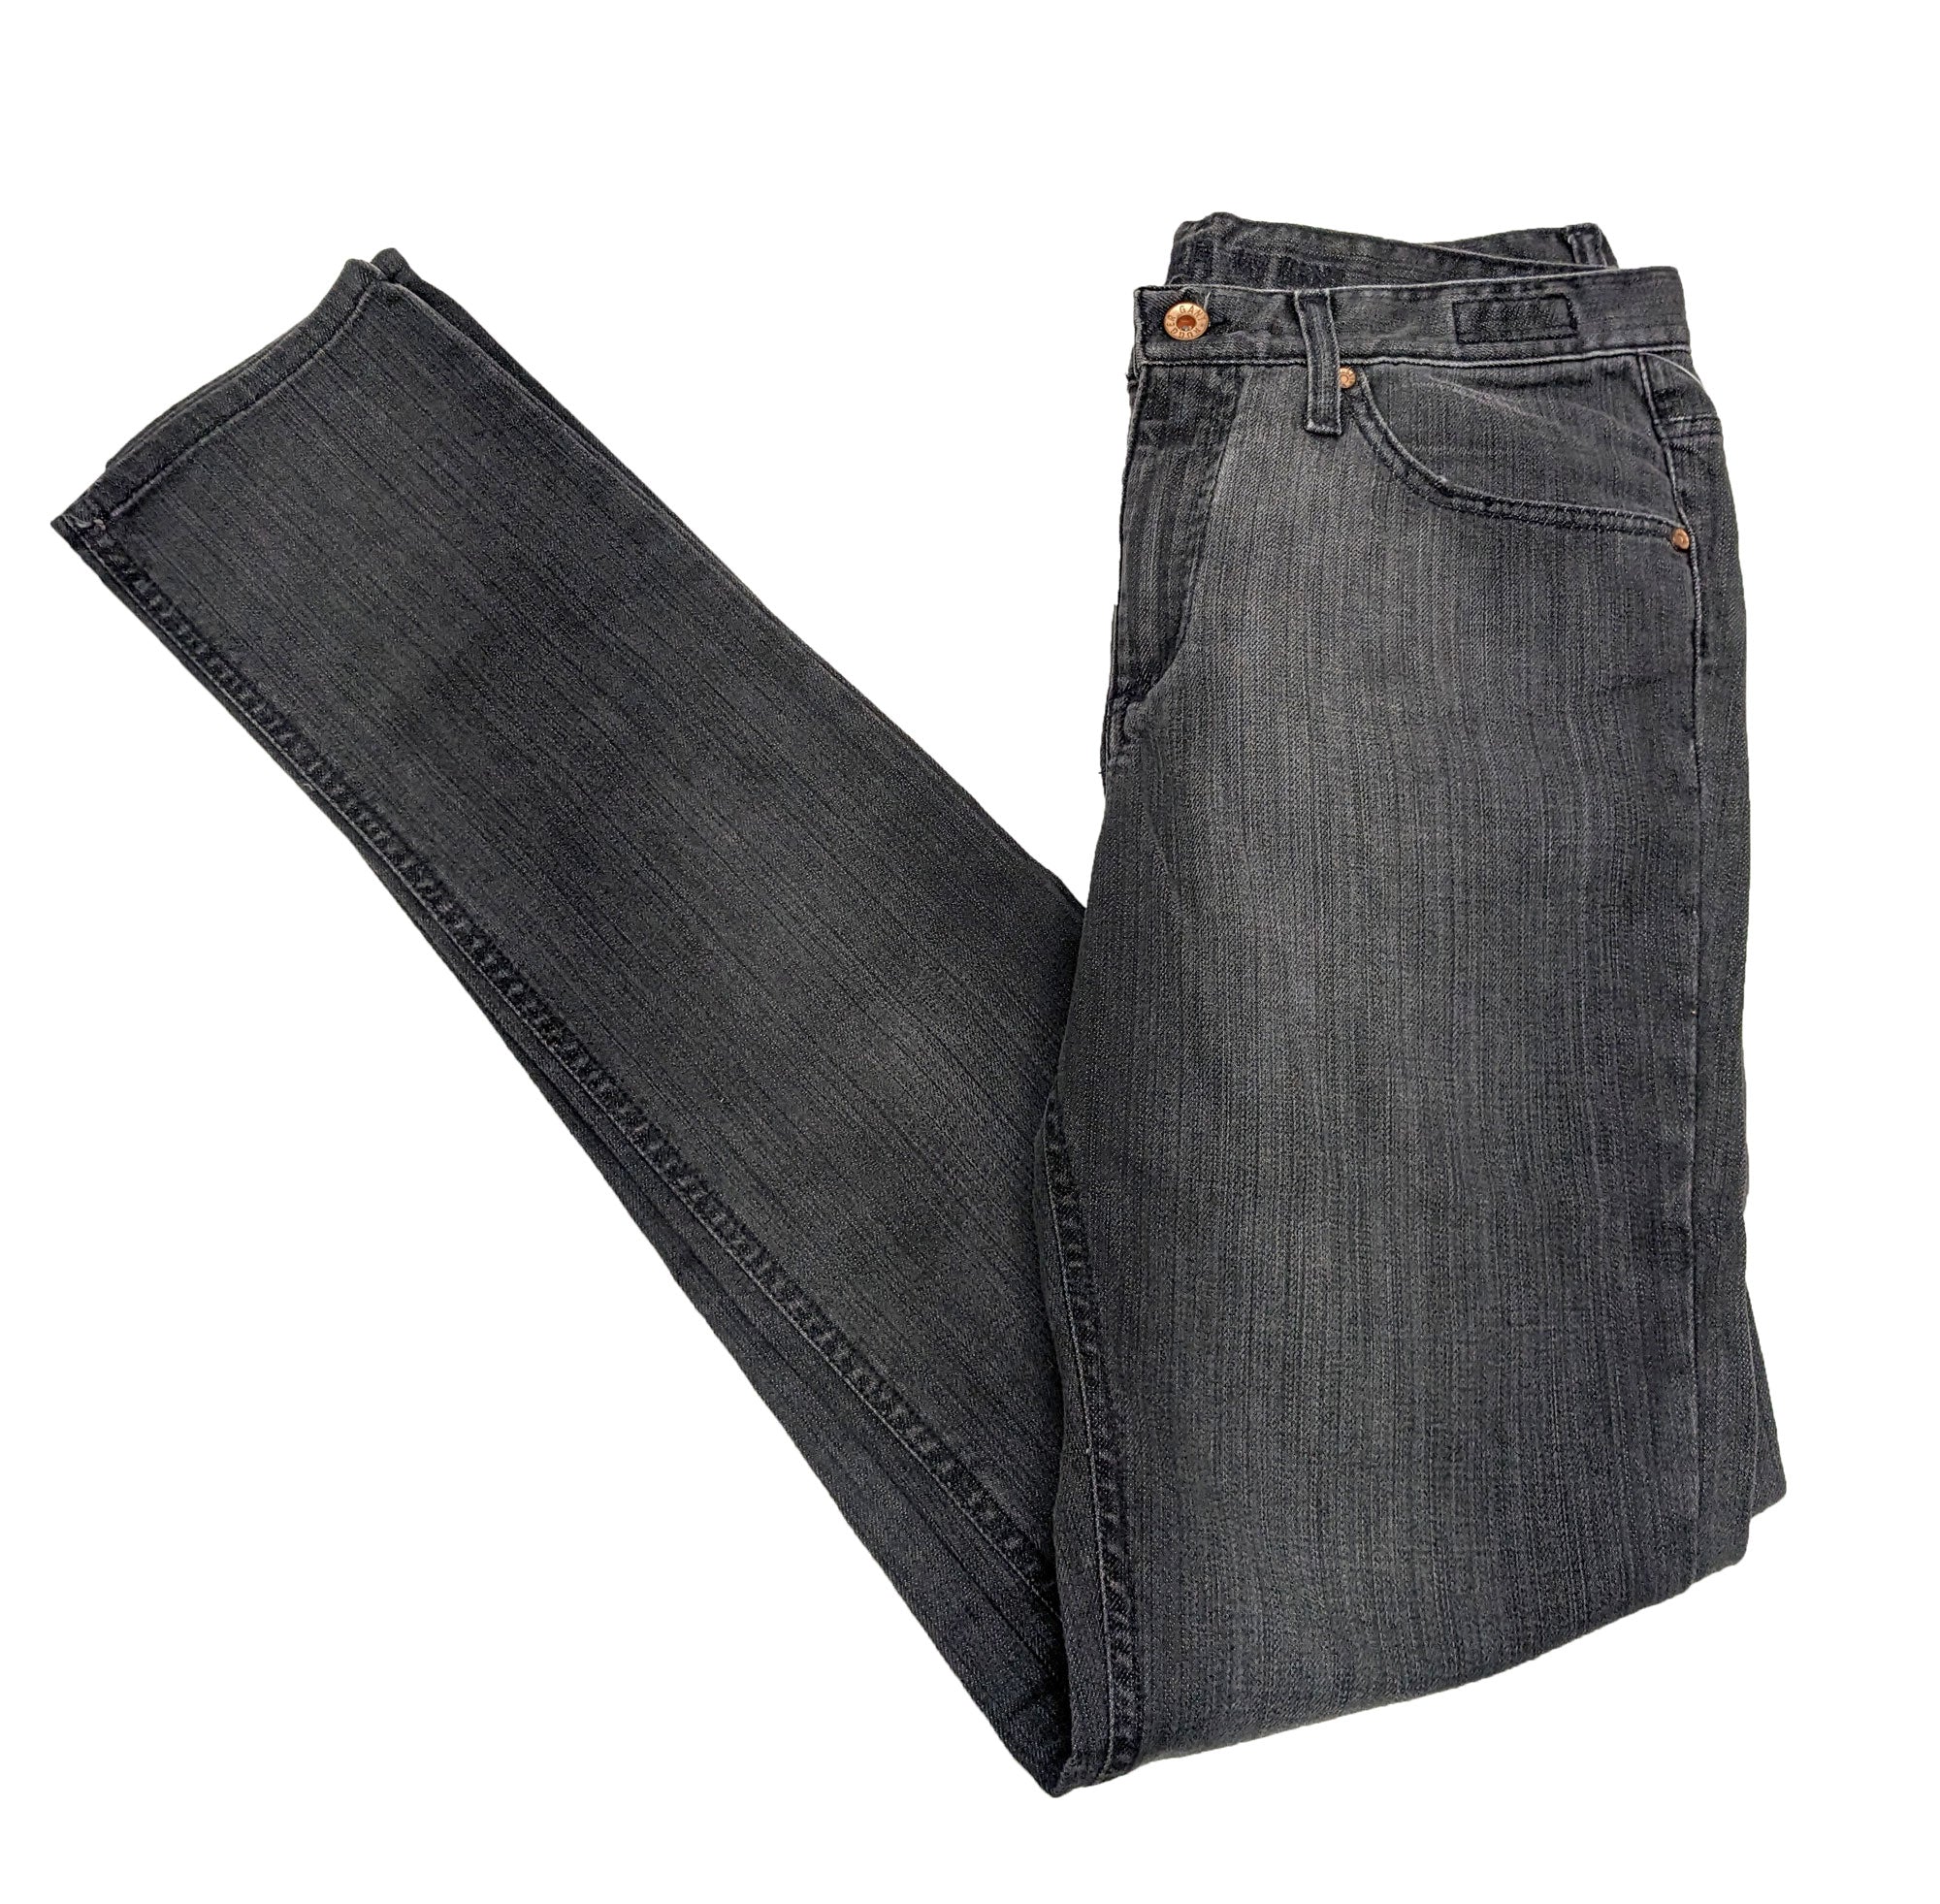 GANT RUGGER Women's Blackstone Washed High Waist Jeans Size 30/34